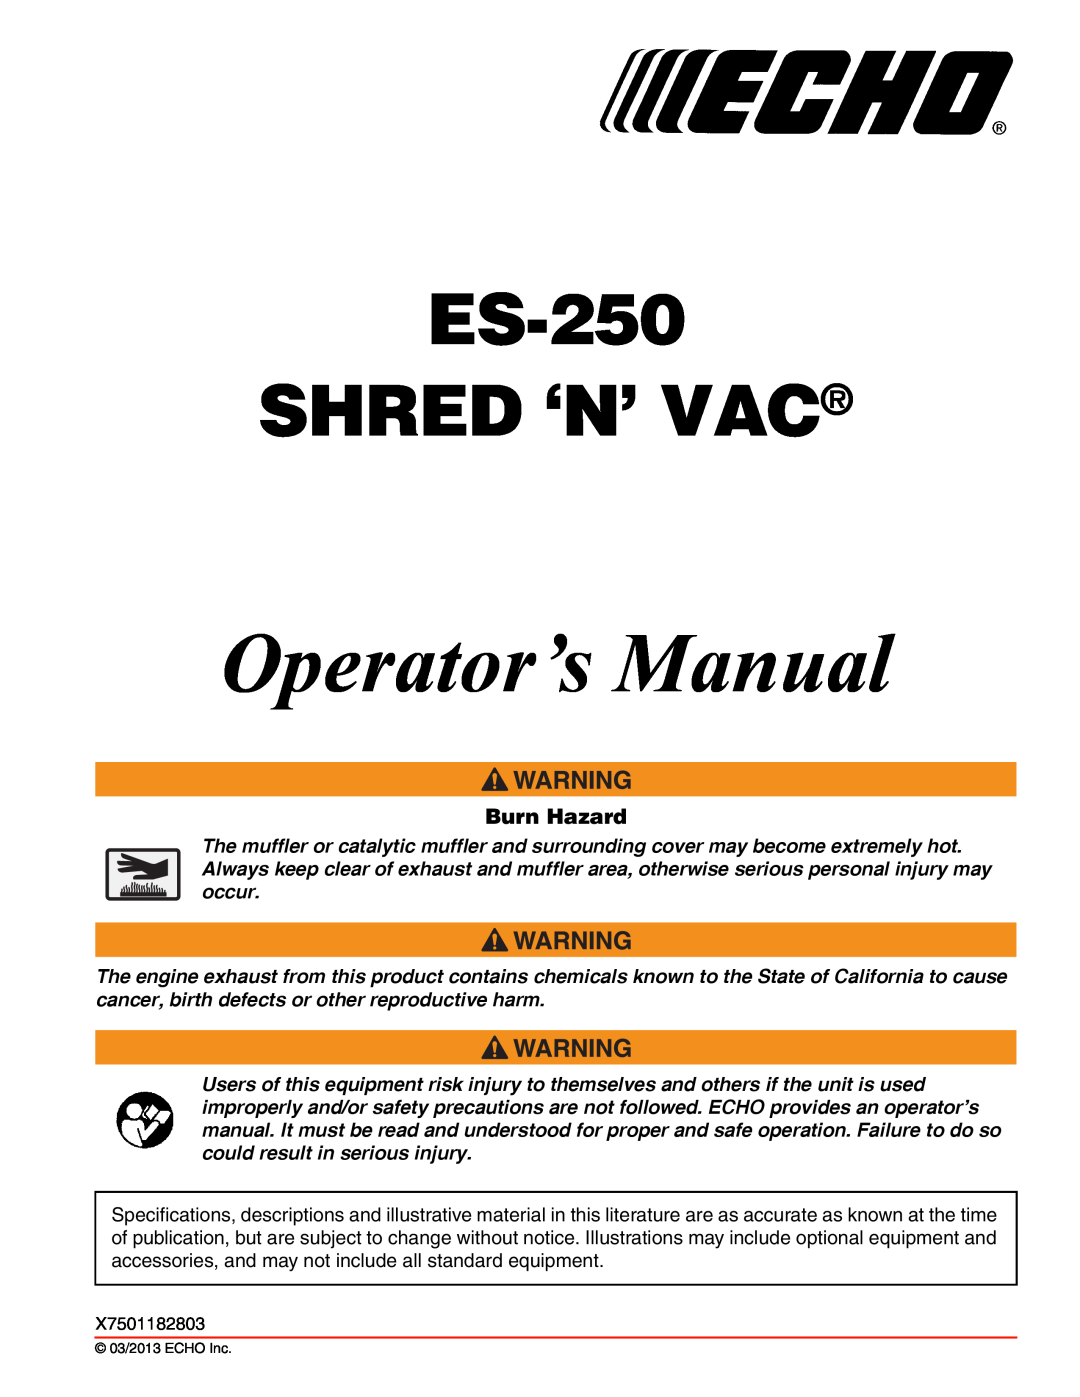 Echo specifications Burn Hazard, Operator’s Manual, ES-250 SHRED ‘N’ VAC 